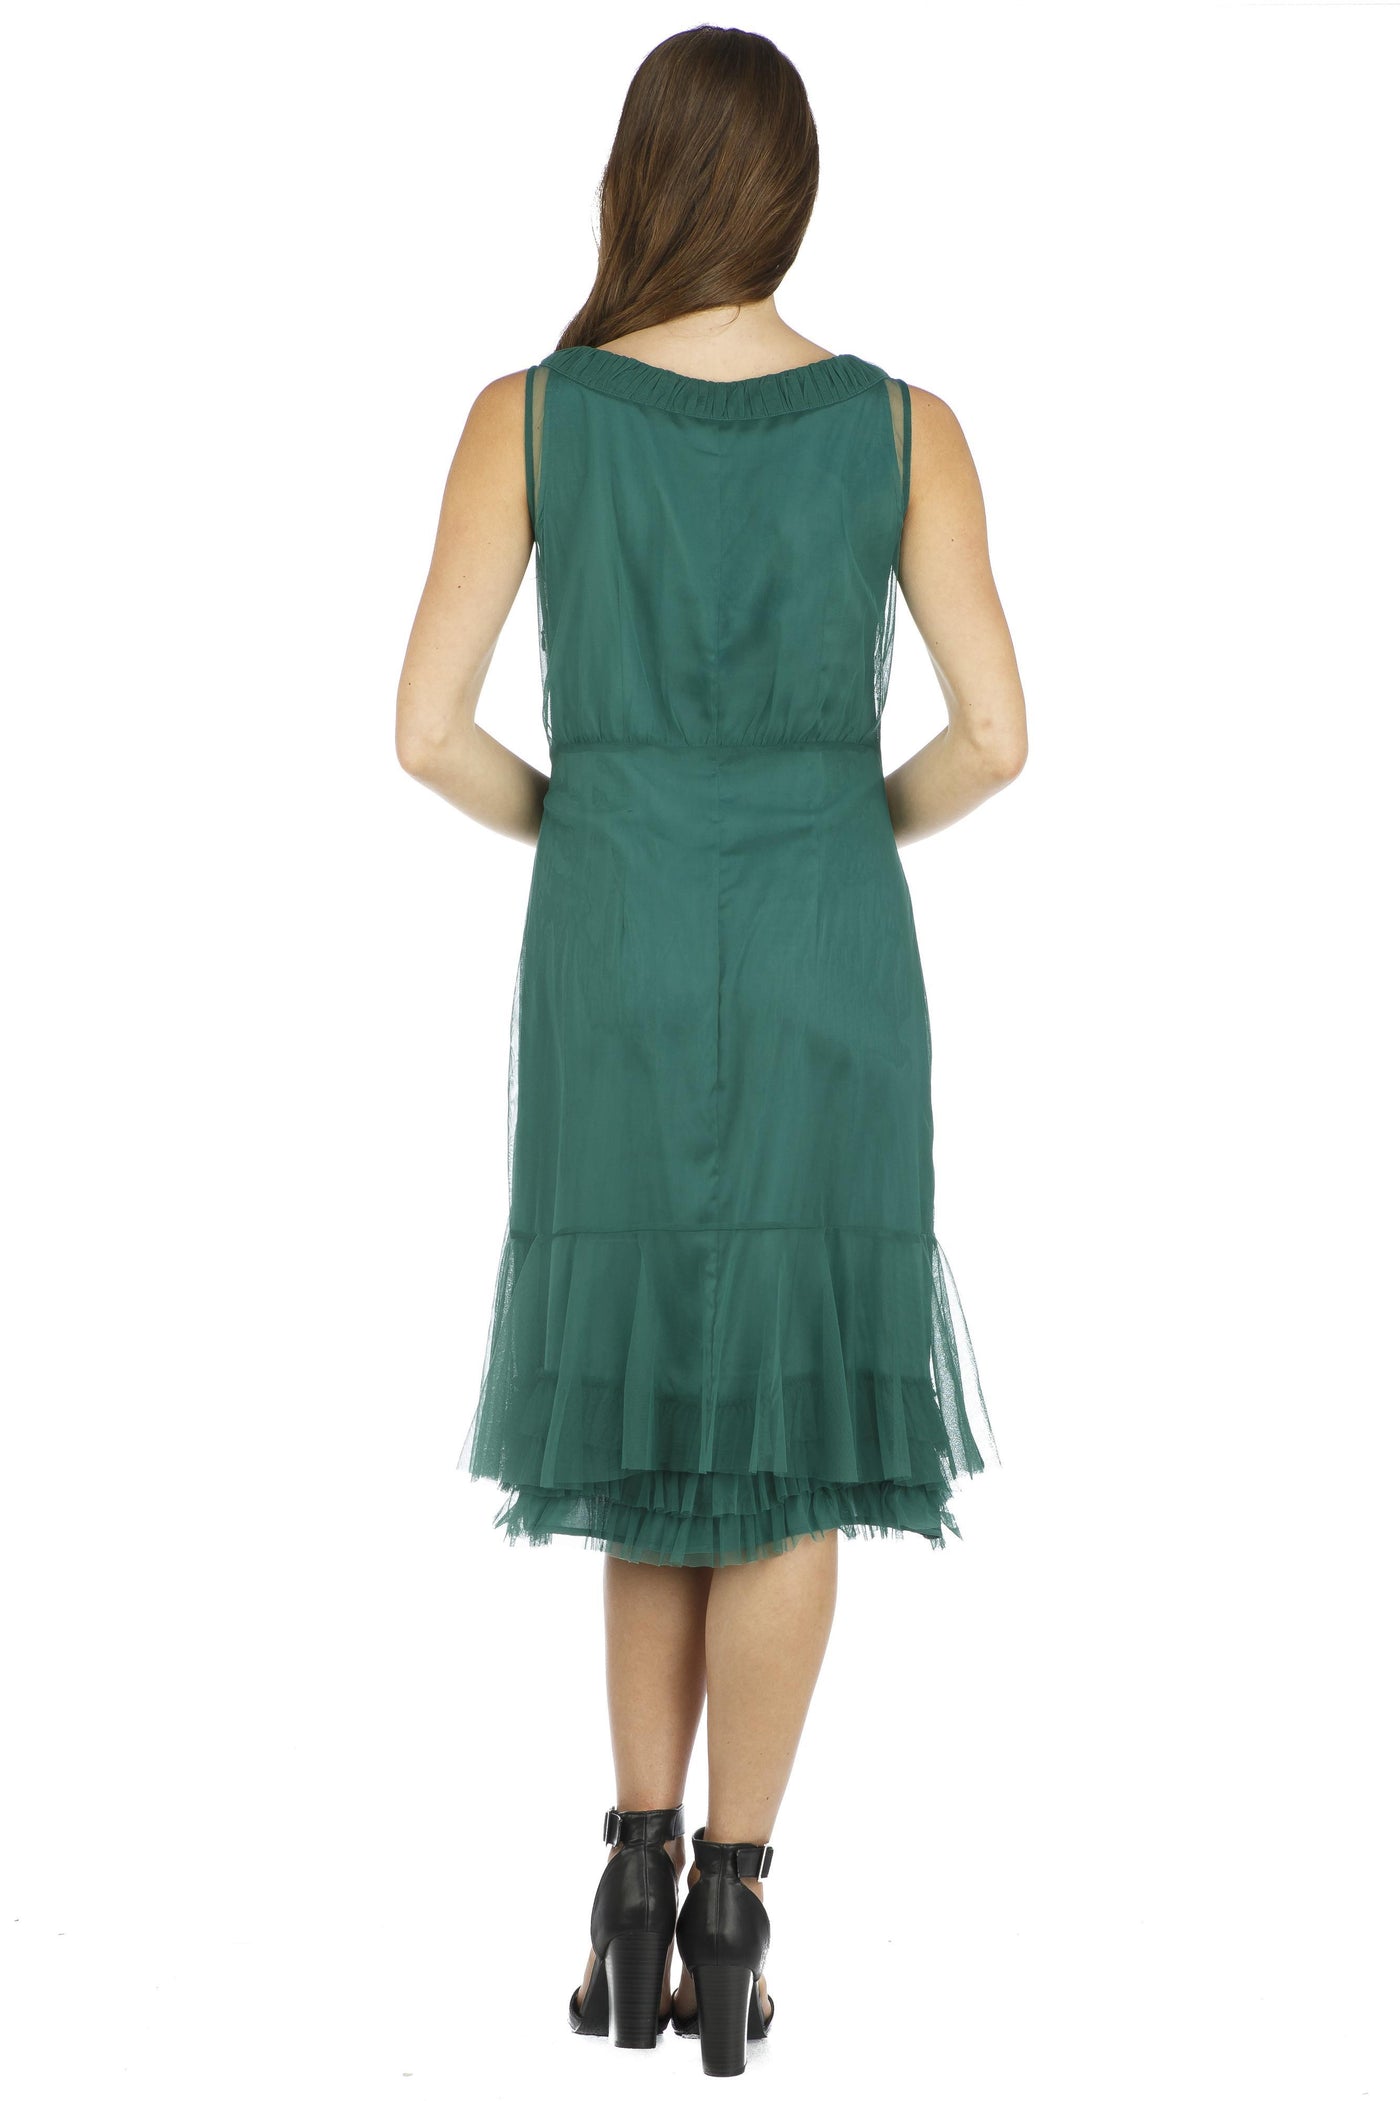 Tatianna Vintage Style Party Dress in Green by Nataya - SOLD OTU